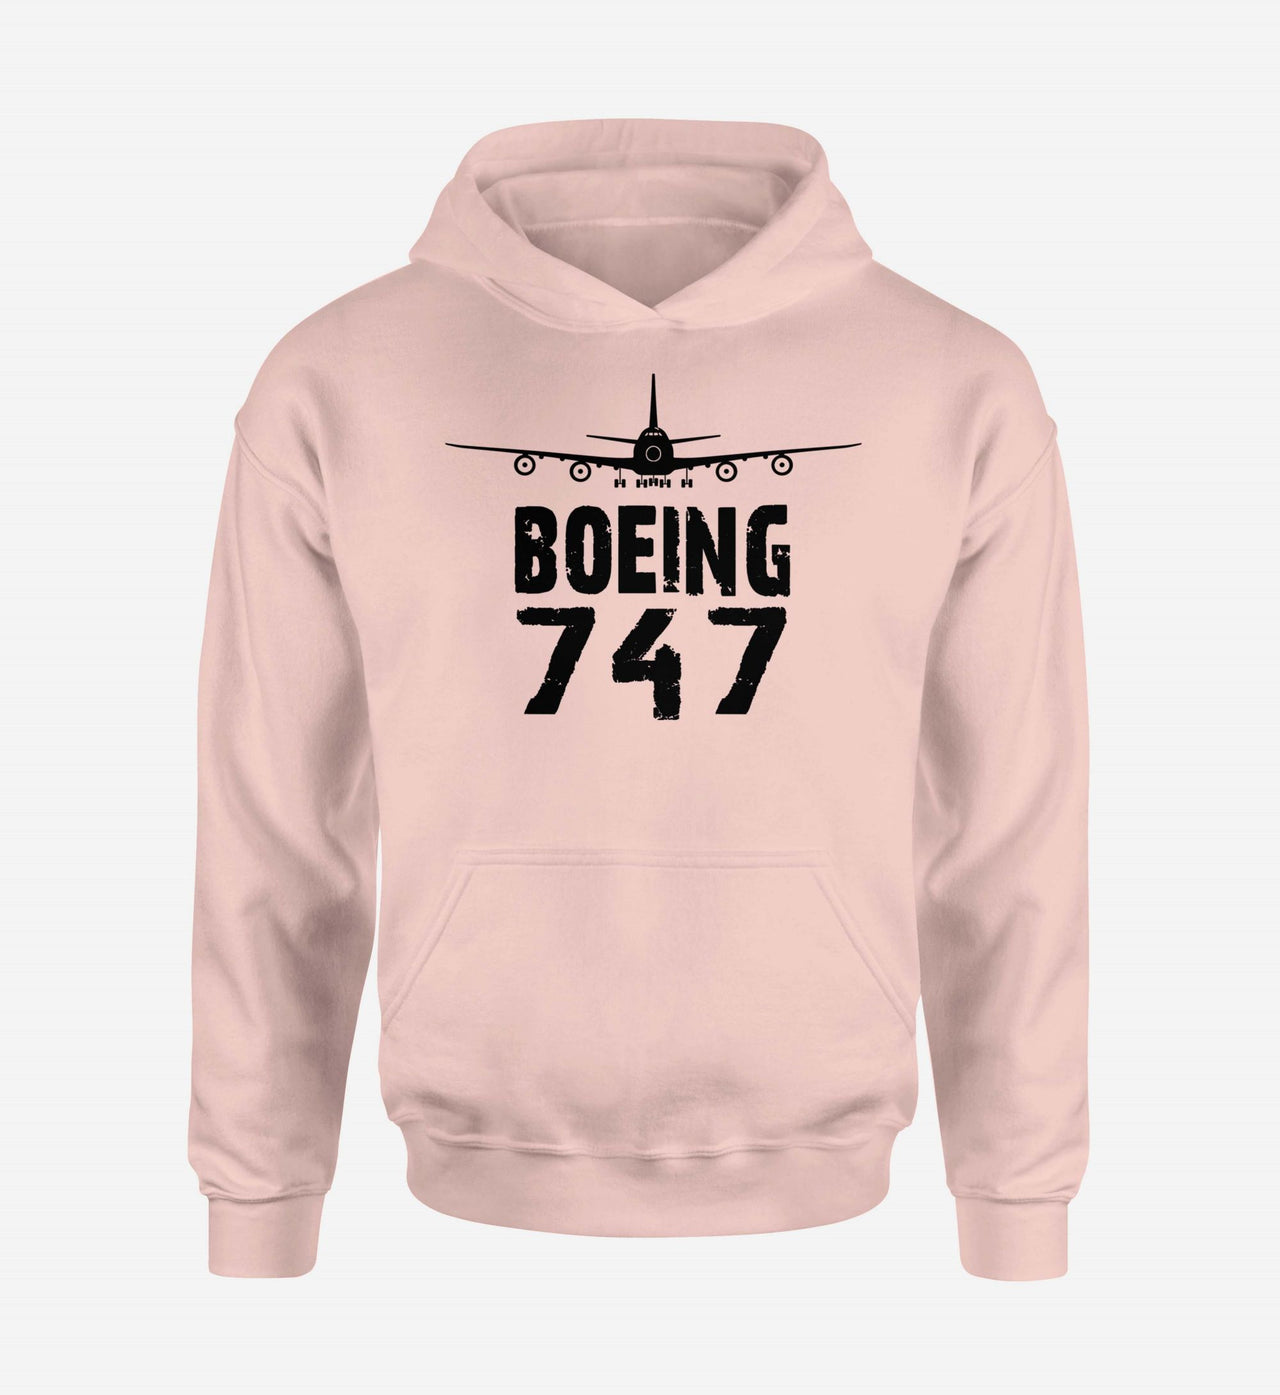 Boeing 747 & Plane Designed Hoodies